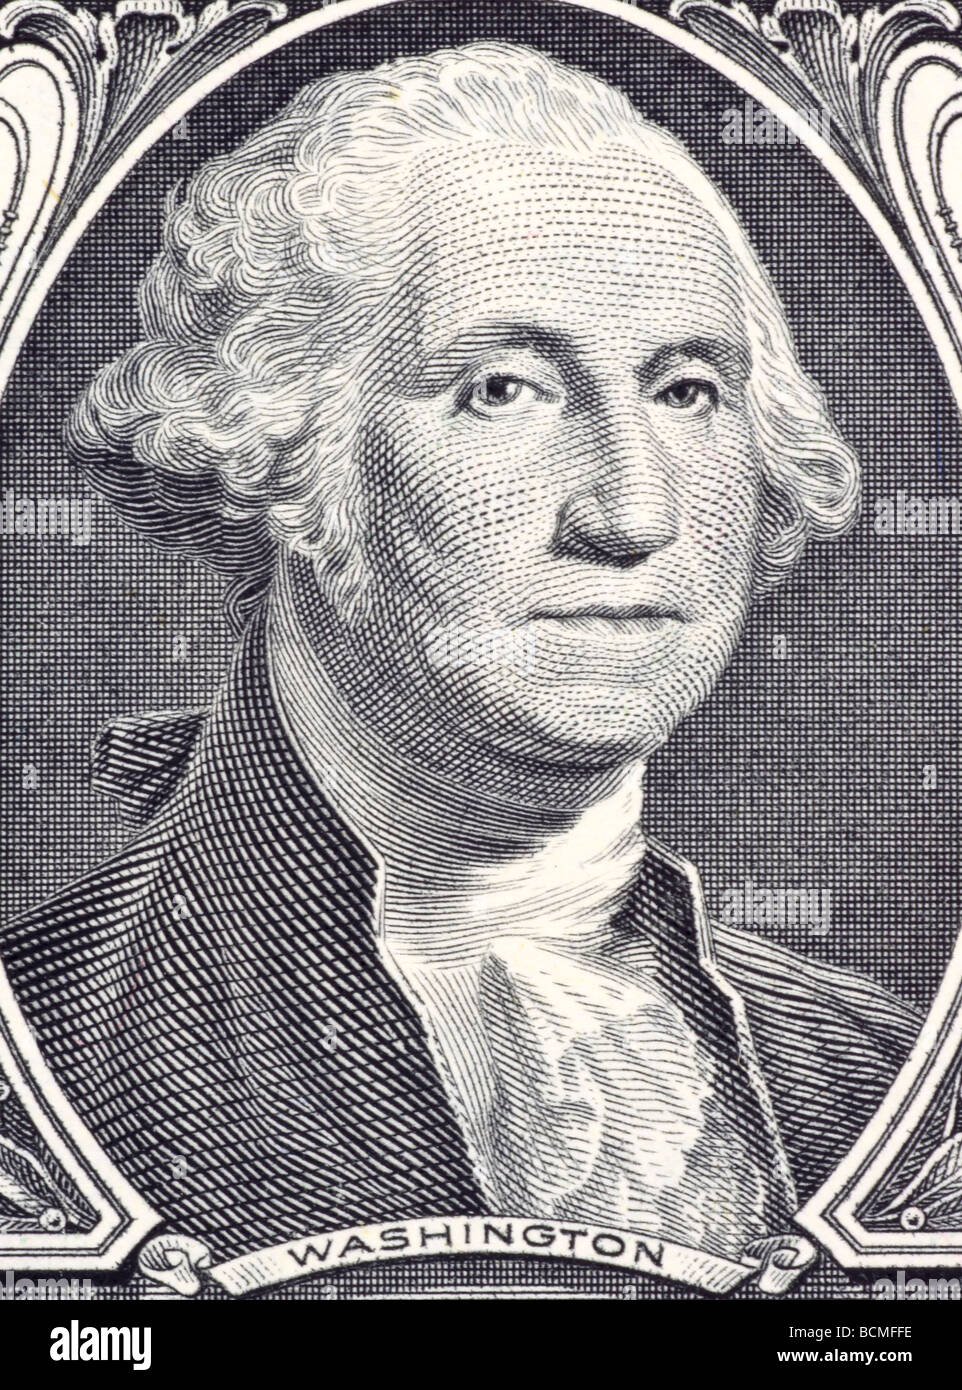 George Washington on 1 Dollar 2006 Banknote from USA Stock Photo